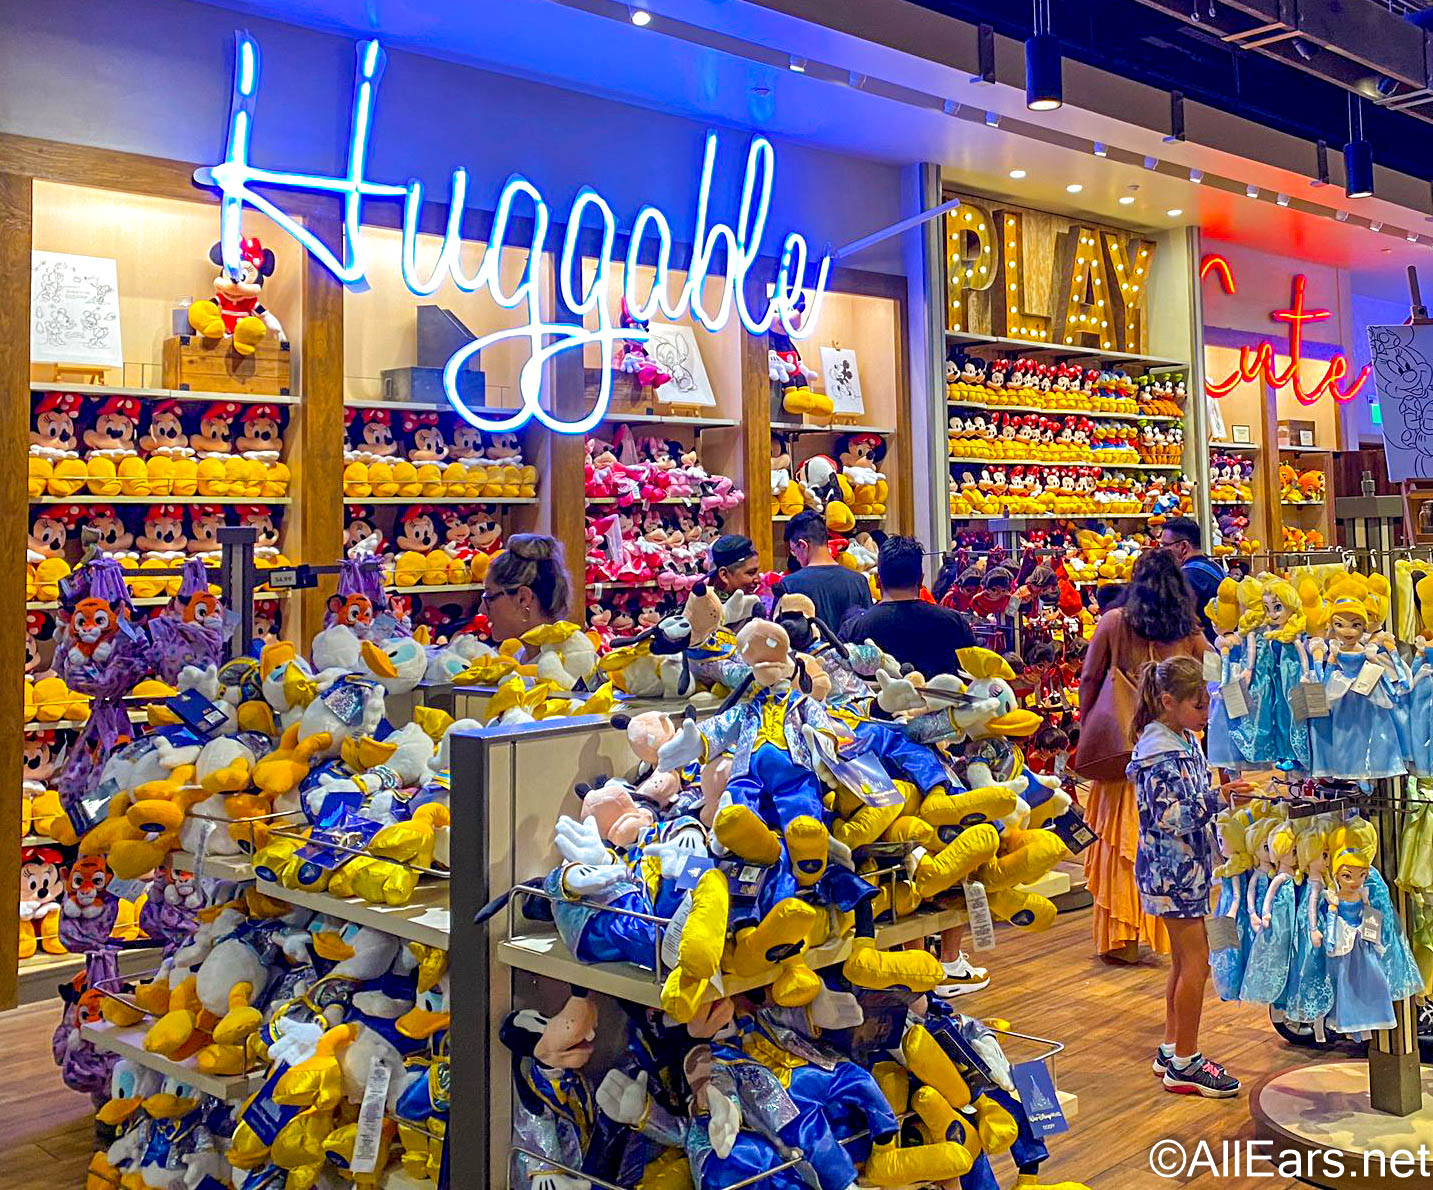 Disney Munchling Plush Characters Hit The Shelves at Walt Disney World -  WDW News Today